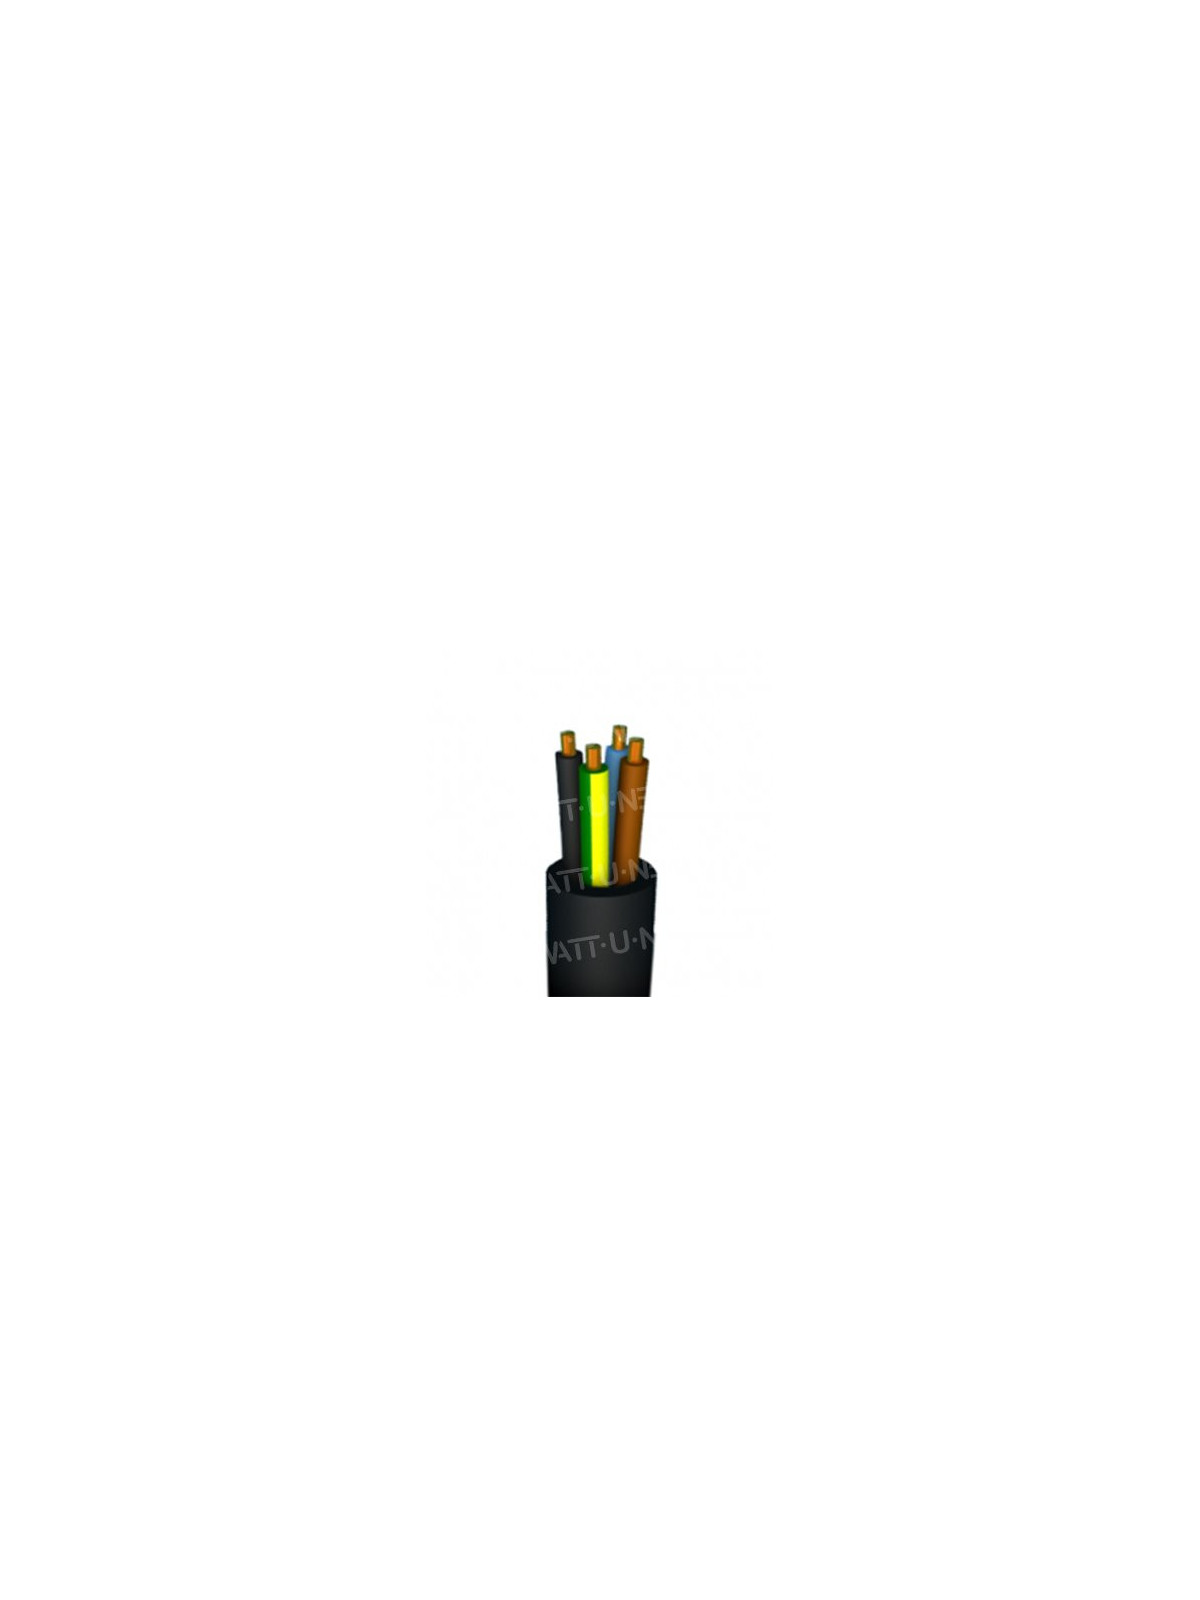 Cable H07RN-F ECA 4G6 450/750V - 1m